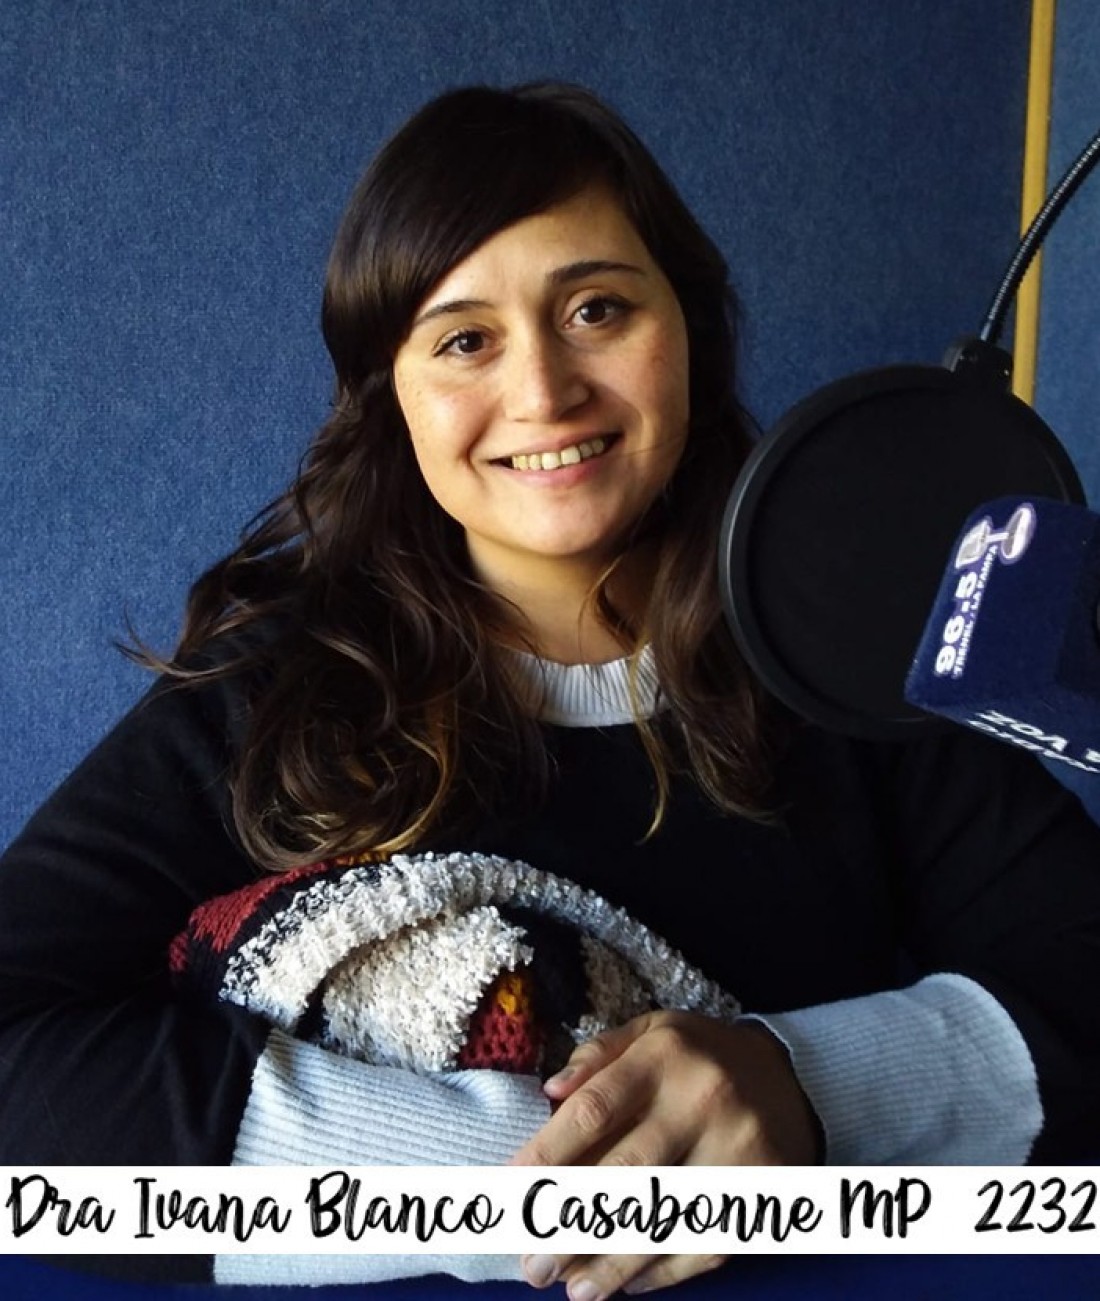 Columna  de Salud en Radio La Voz:  Dra Ivana Blanco Casabonne LACTANCIA MATERNA 